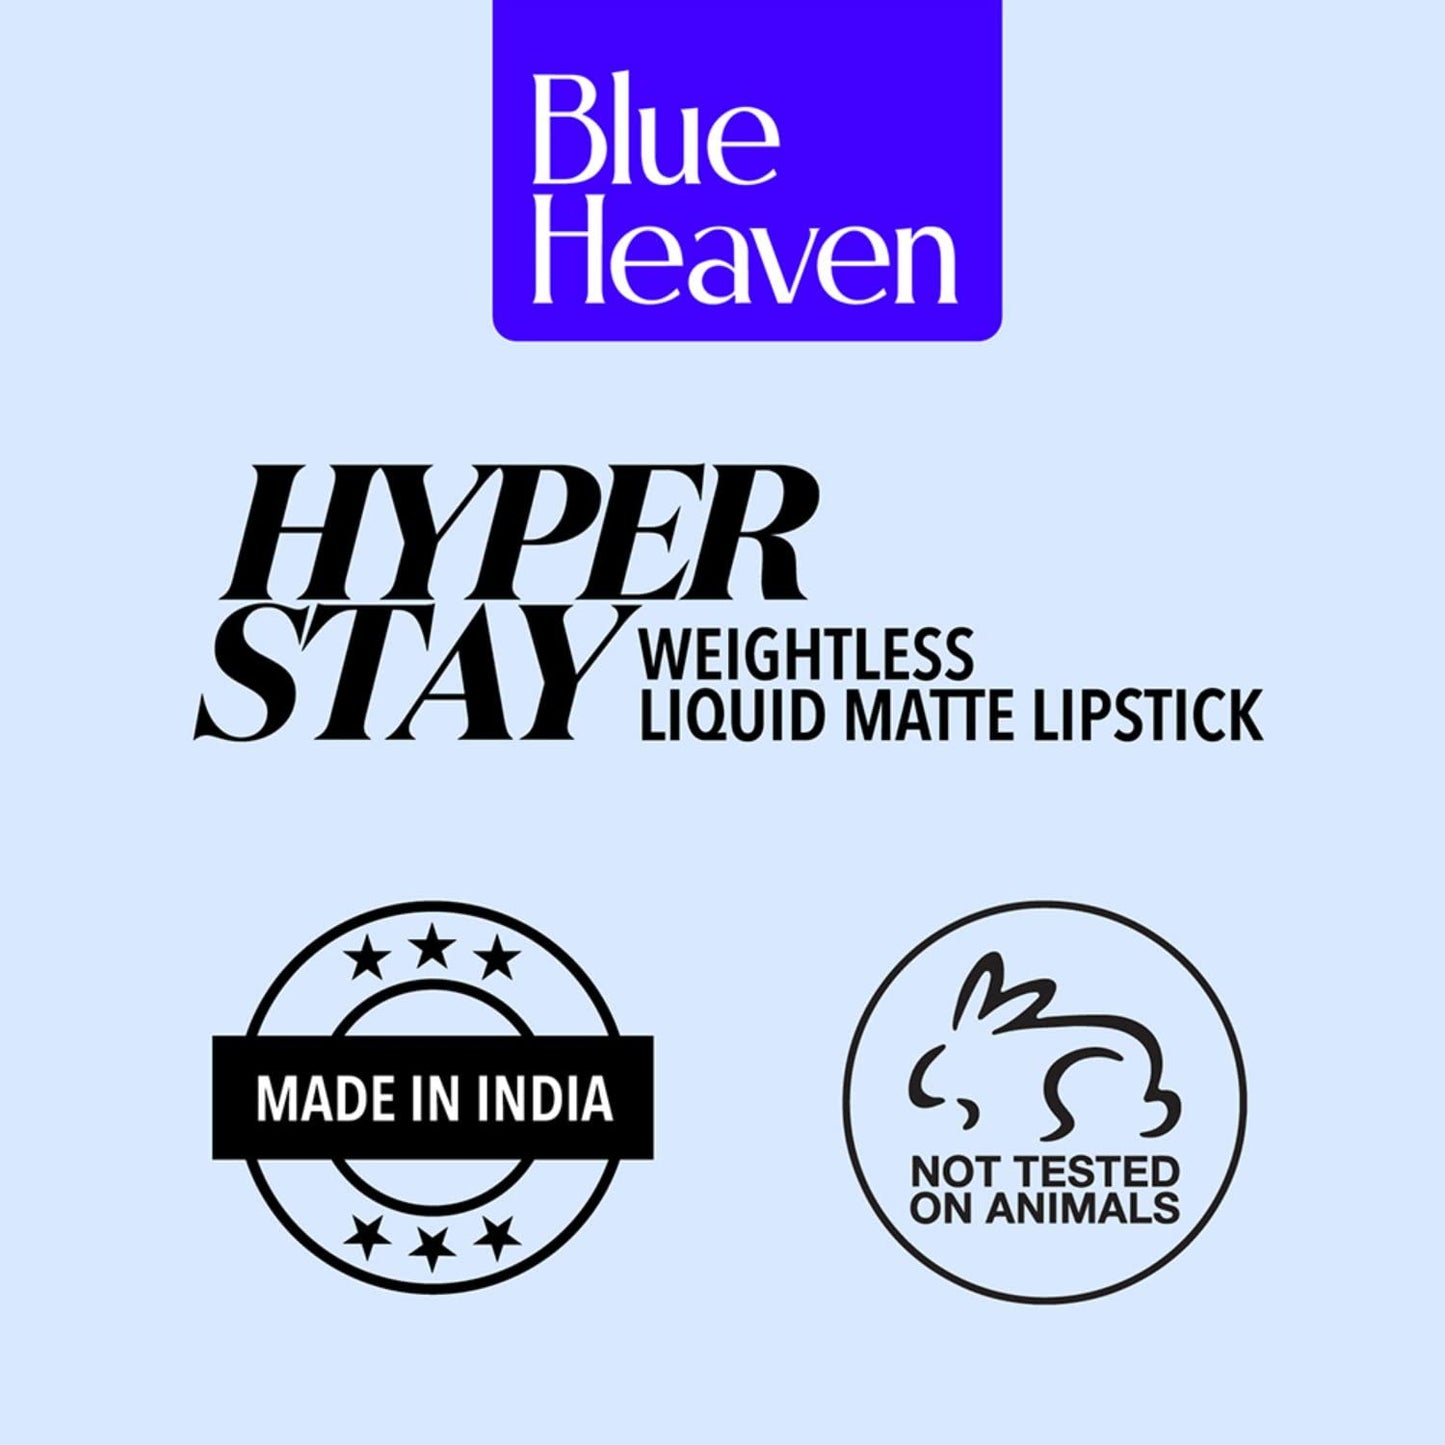 Blue Heaven Hyperstay Weightless Liquid Matte Lipstick, Smudgeproof, Transfer proof, Salmon Pink, 6ml